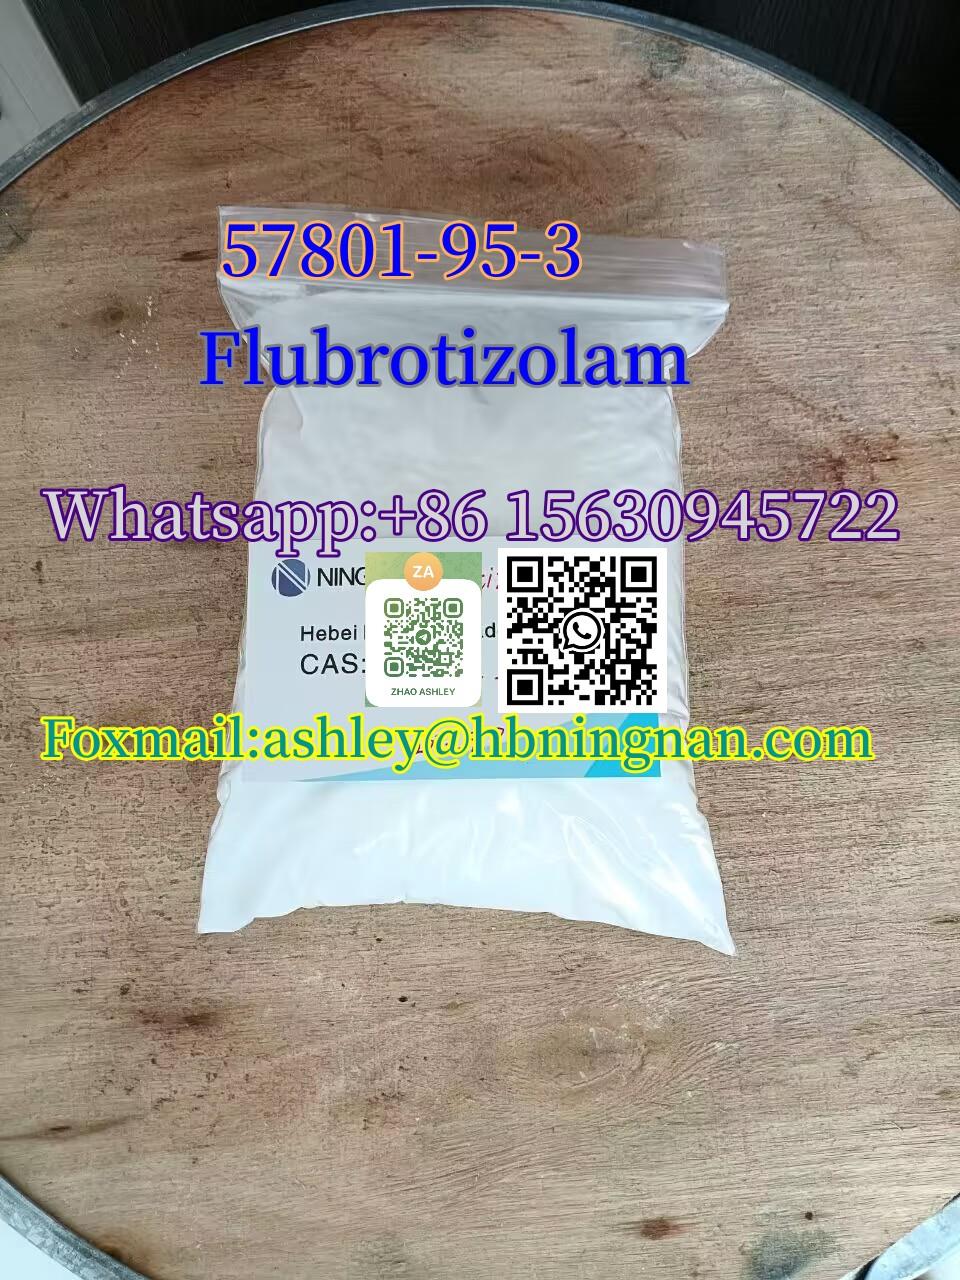 cas 57801-95-3 Flubrotizolam Factory wholesale supply, competitive price!,57801-95-3 Flubrotizolam,ningnan ,Industrial Services/Financial